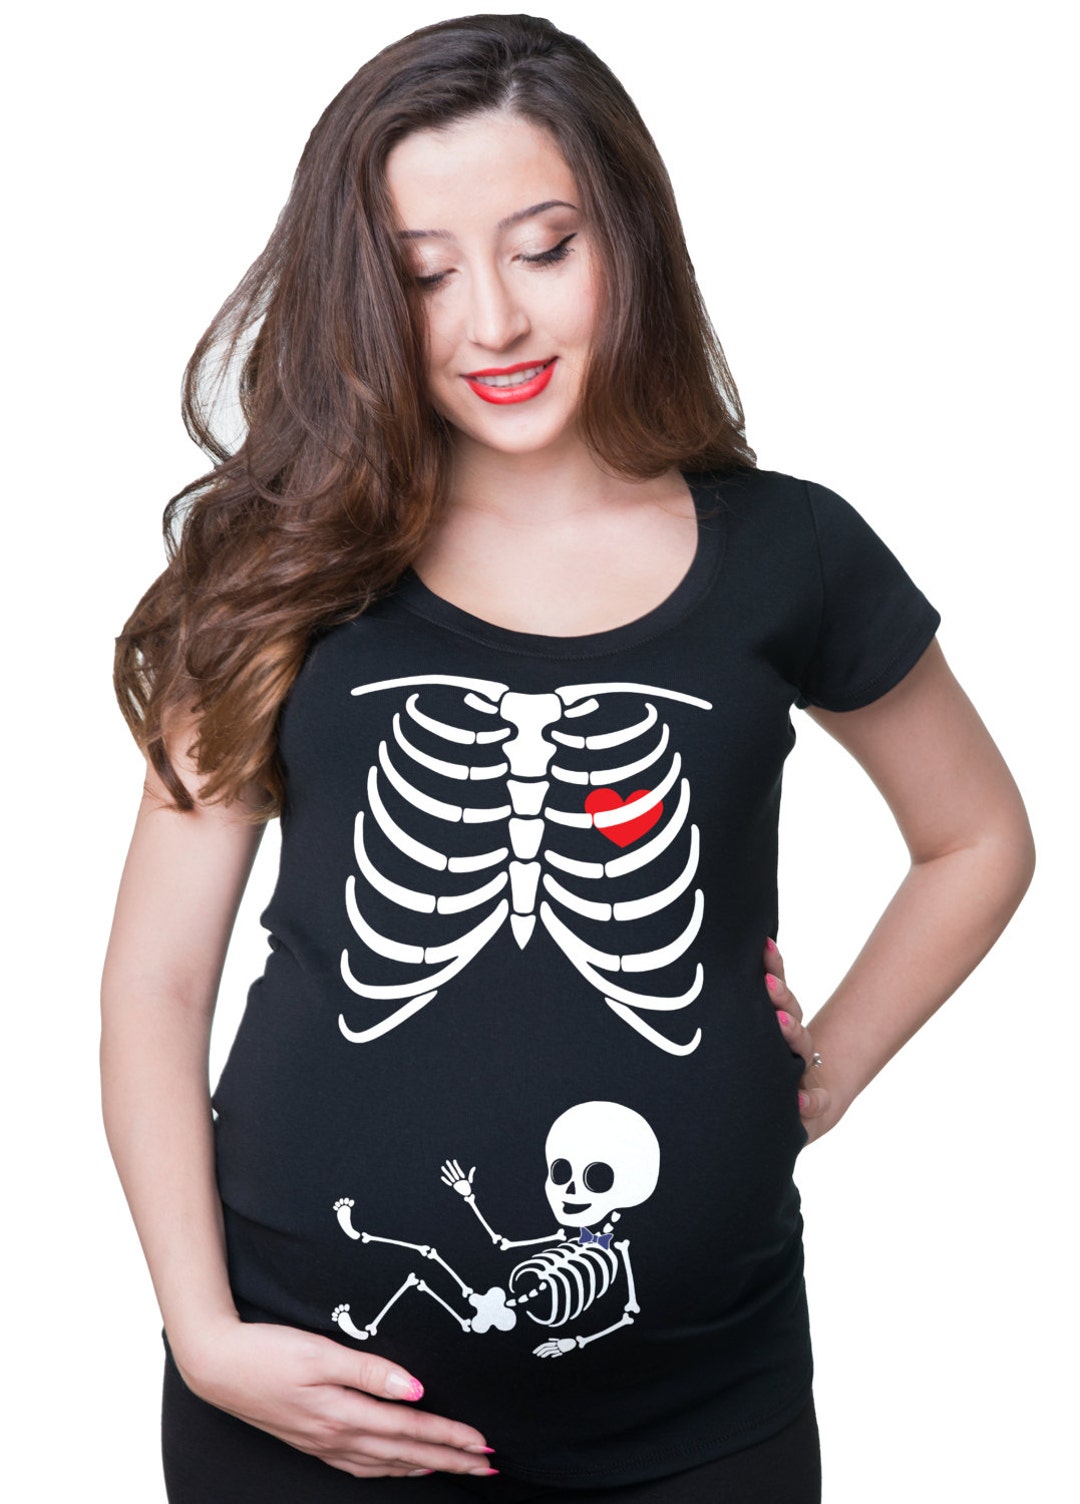 Camiseta Esqueleto Raio x Camisa Grávida Menina Ah01324